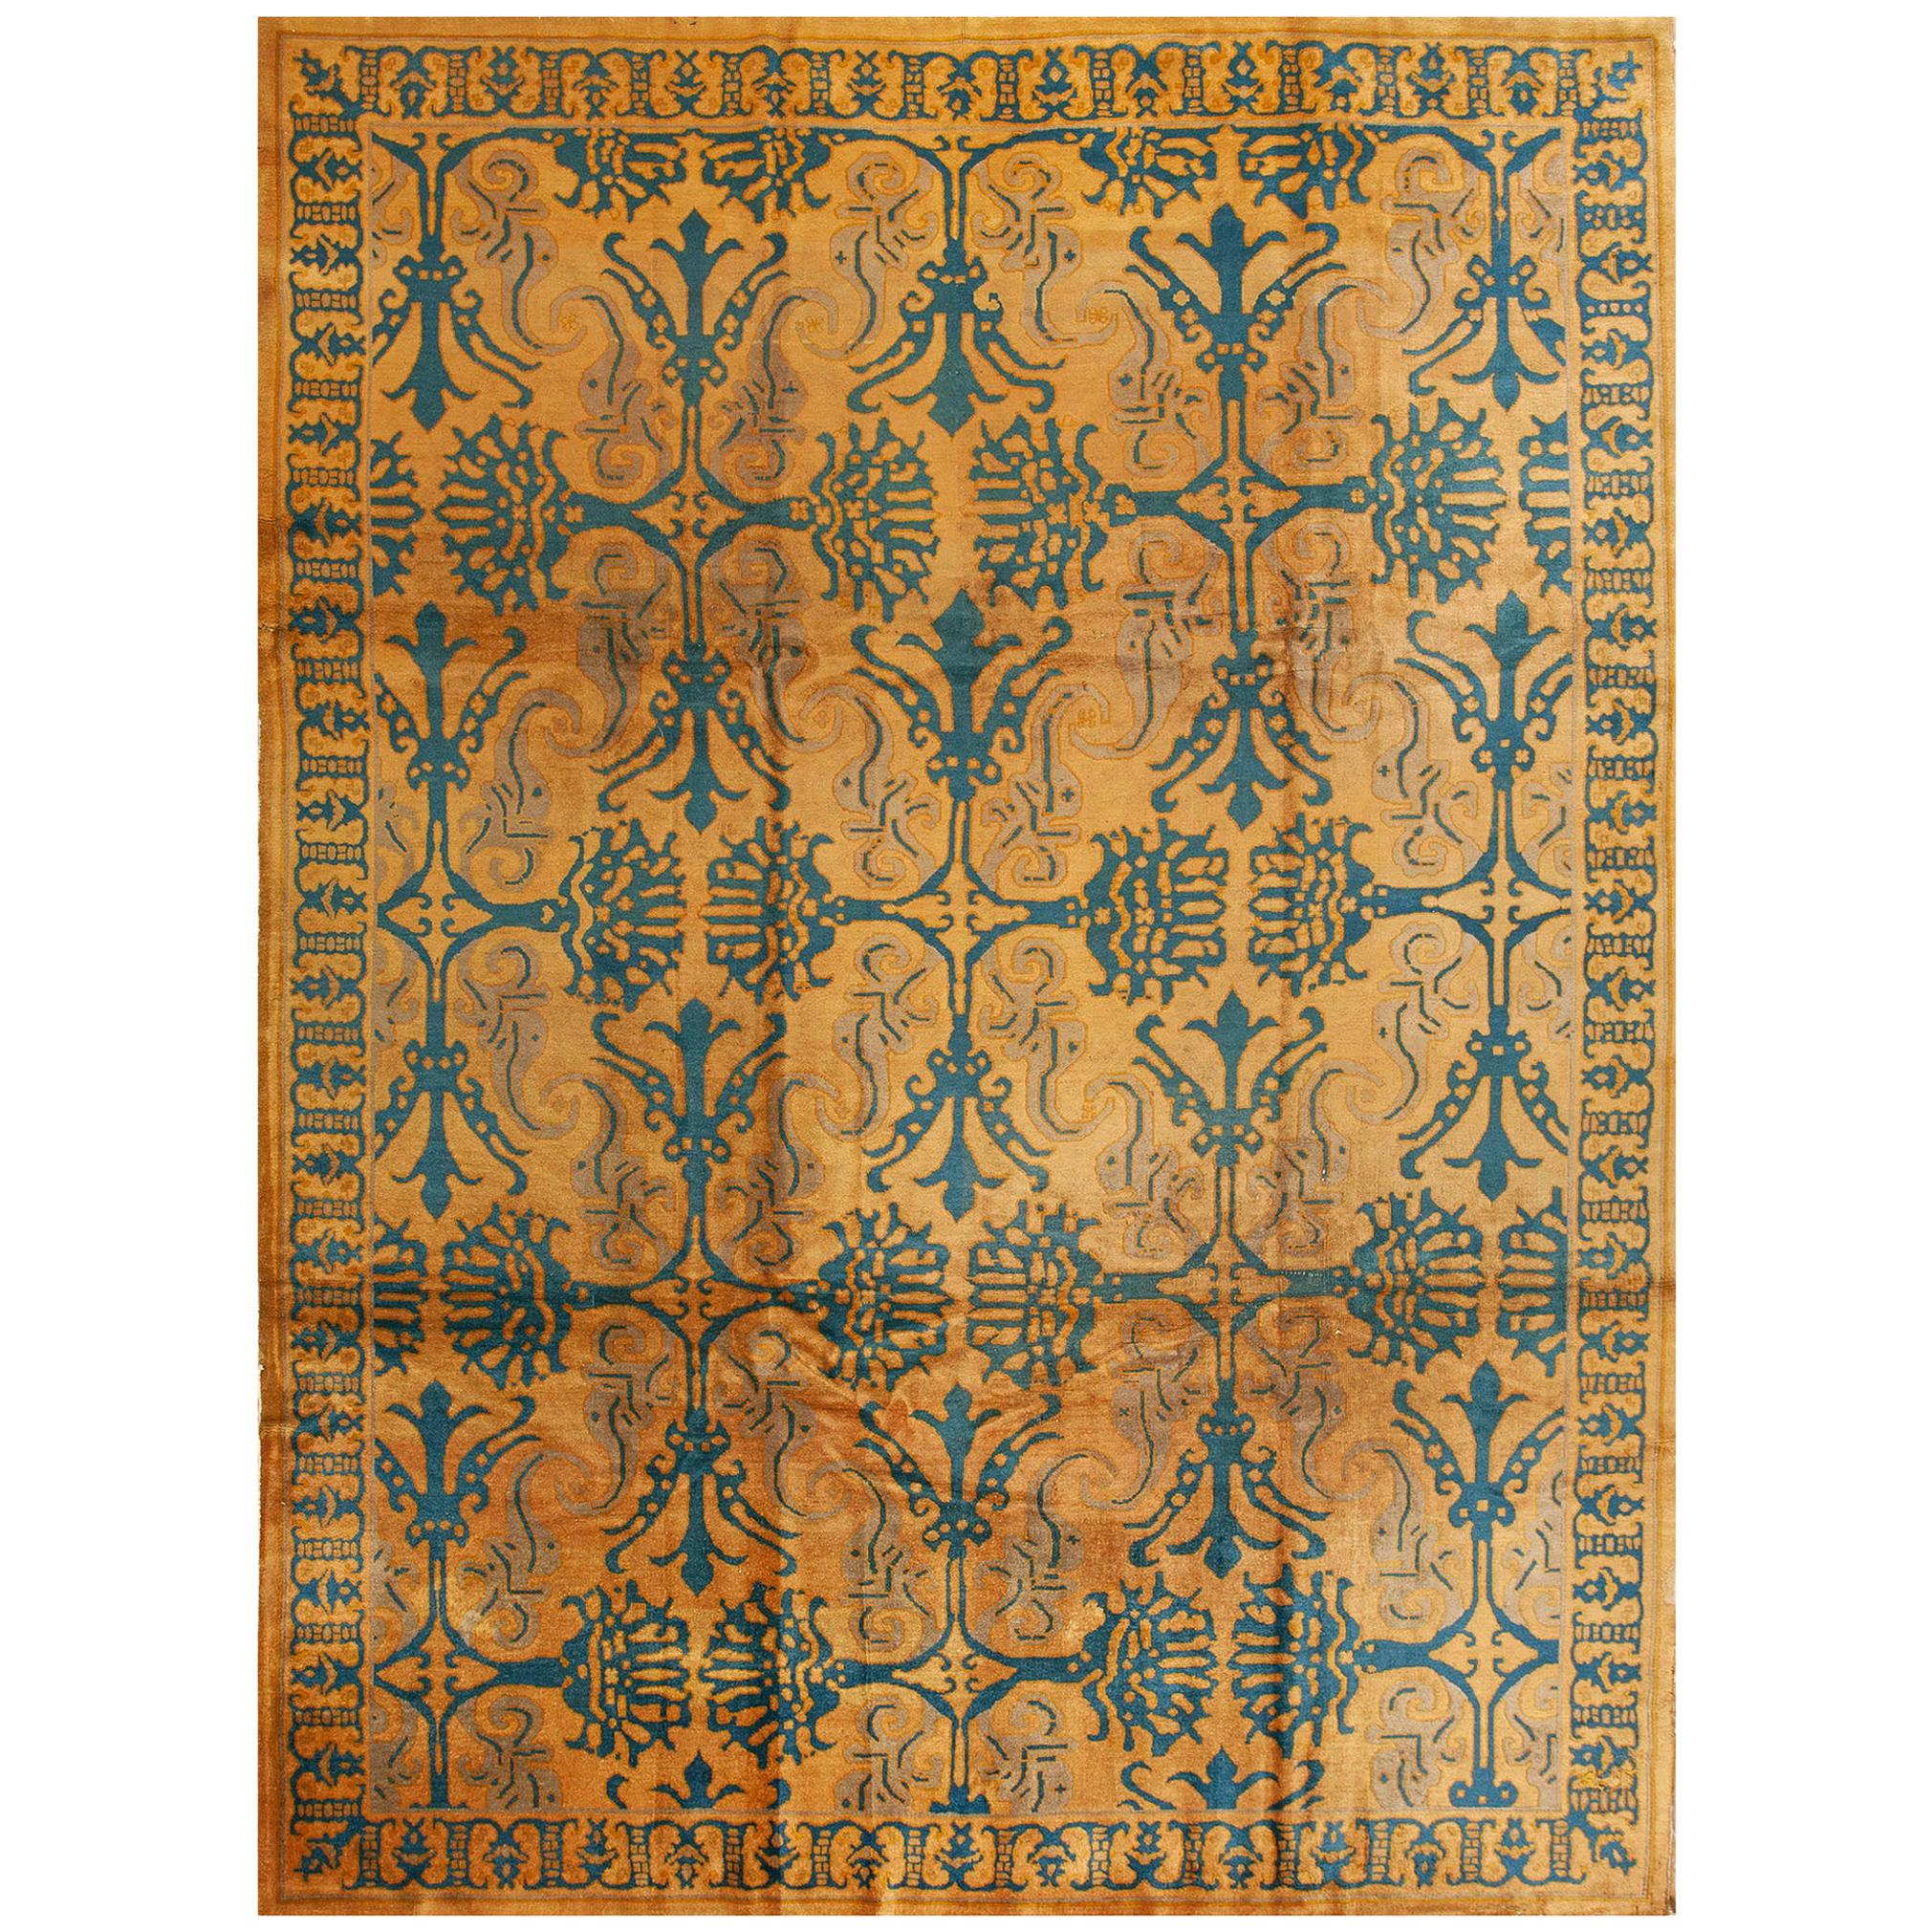 1920s Chinese Art Deco Carpet ( 9' x 11'10" - 275 x 360 ) 